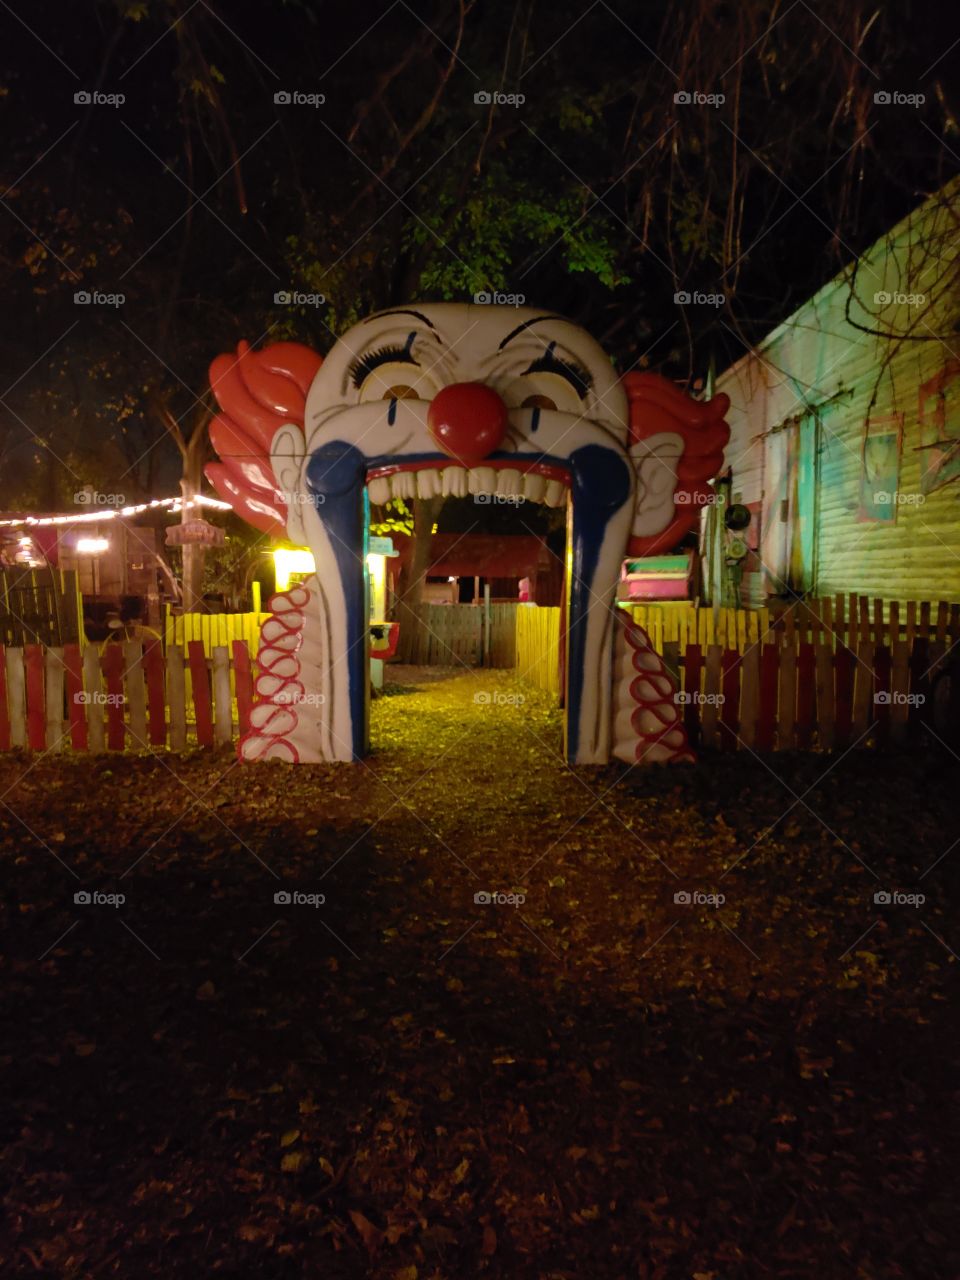 Haunted House Clown Entrance